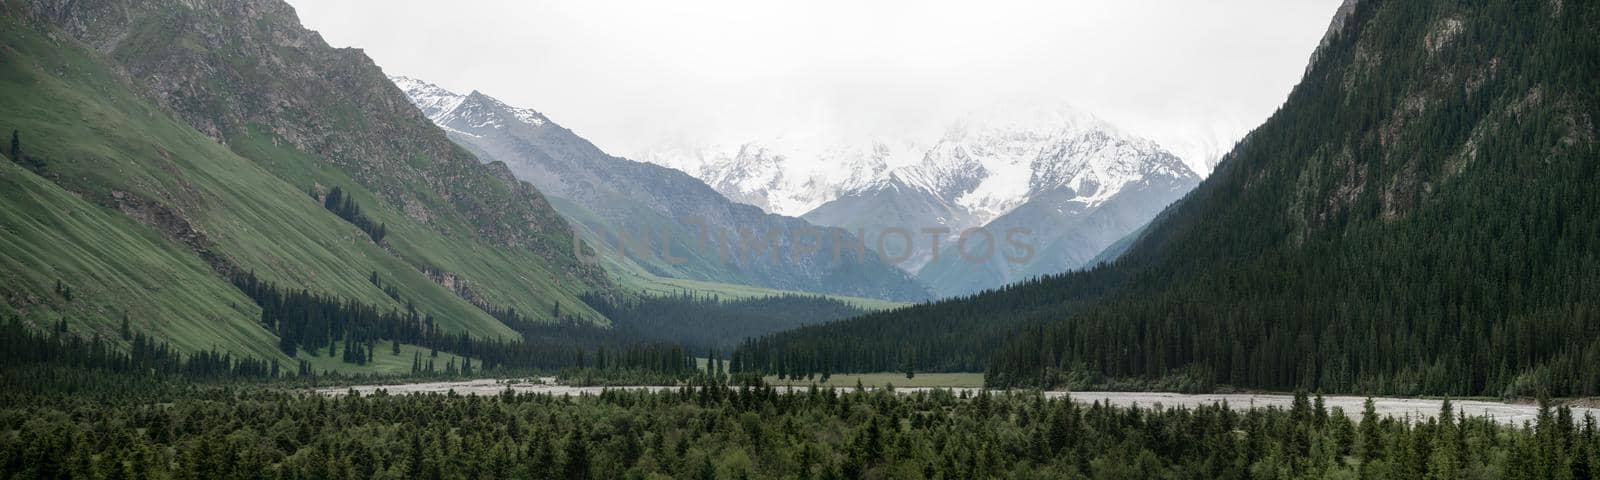 Snowy mountains and trees in a cloudy day. Khan Tengri Mountain, shot in Xinjiang, China.